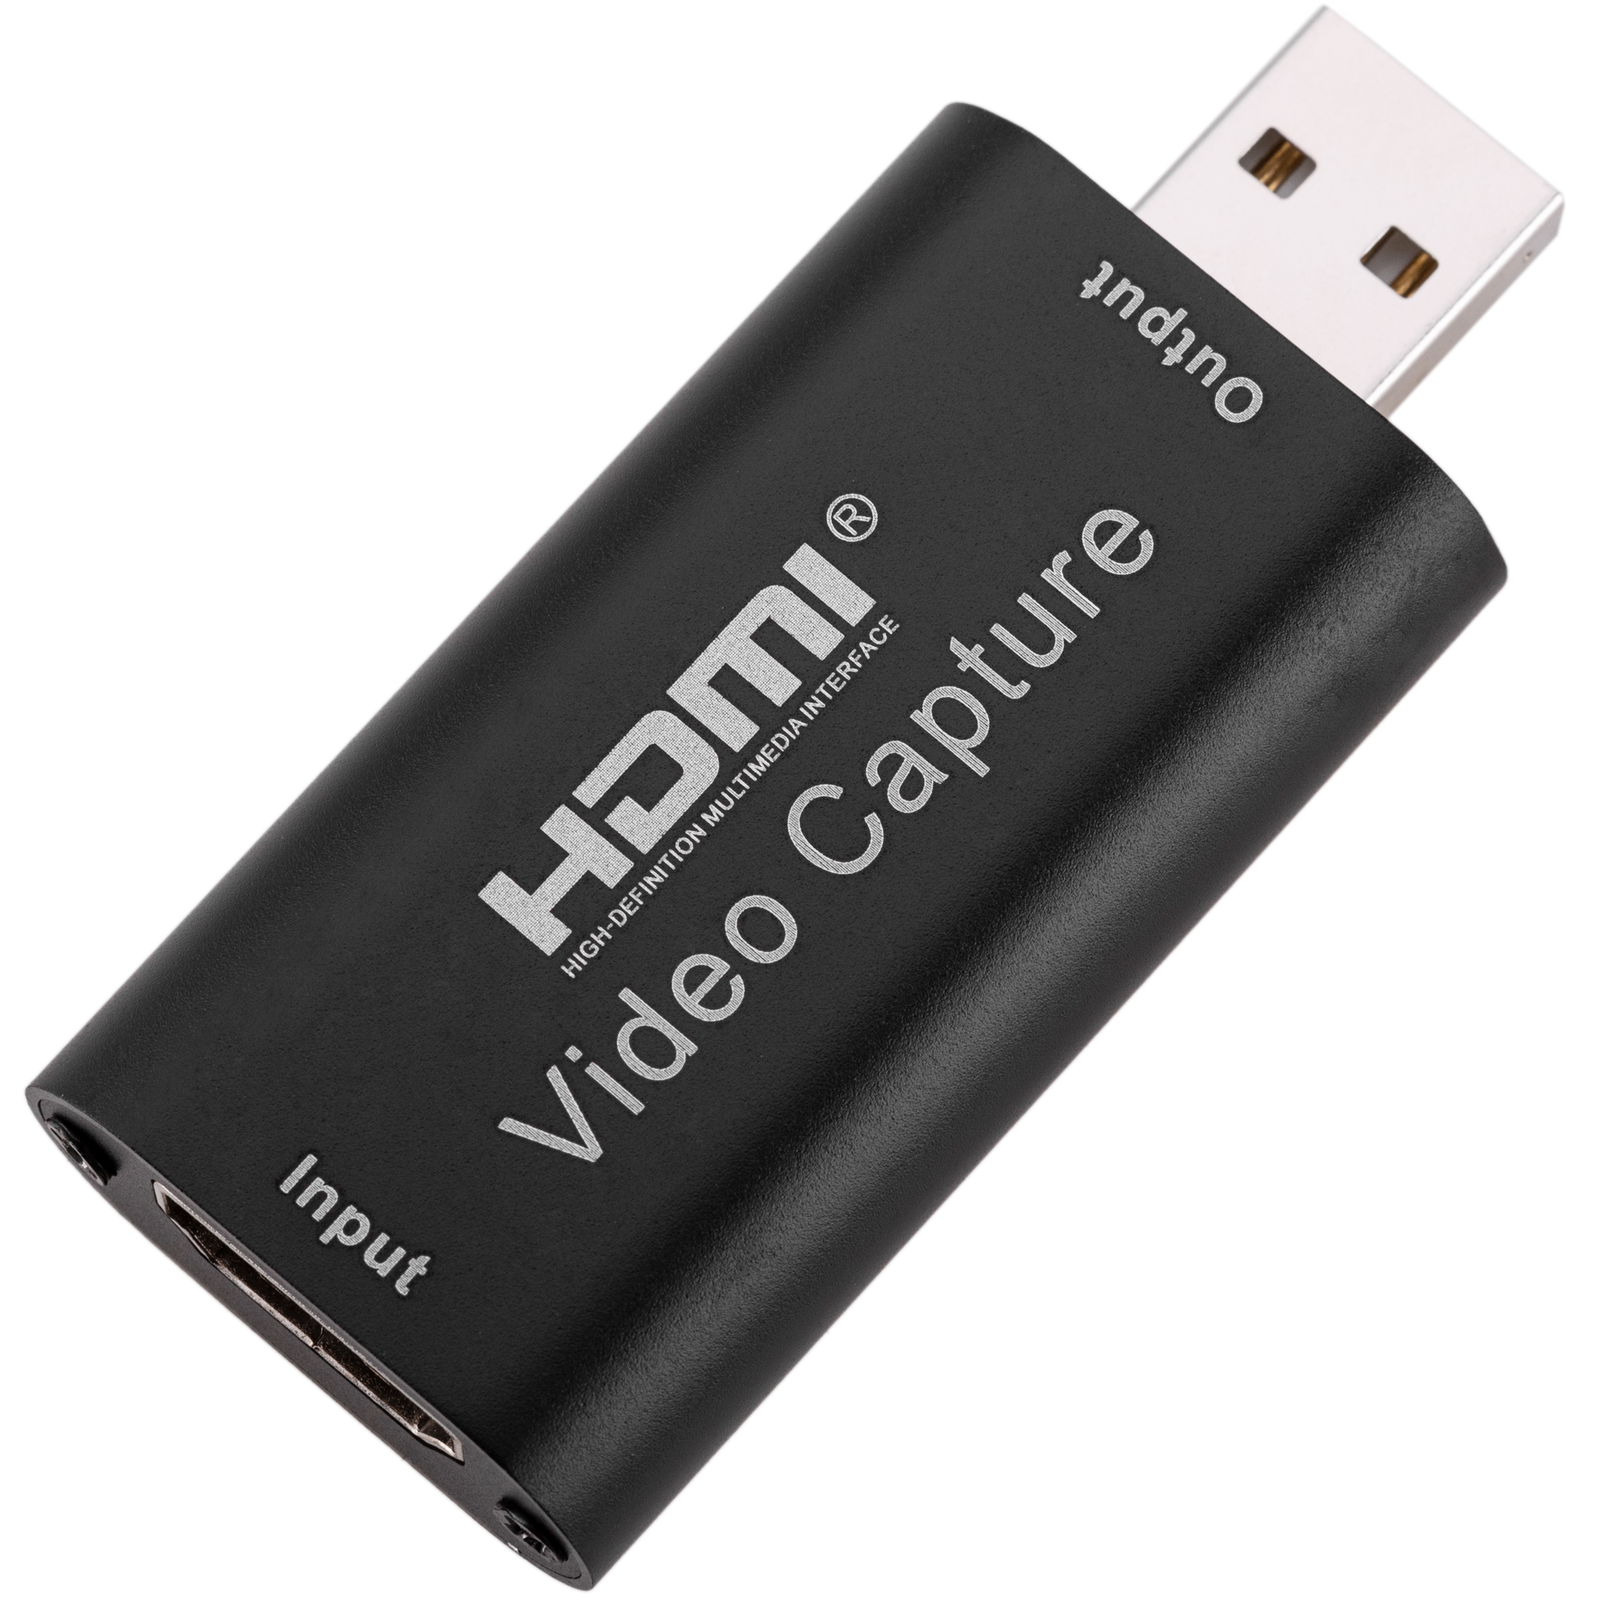 CAPTURADORA VIDEO HDMI 1080P A USB